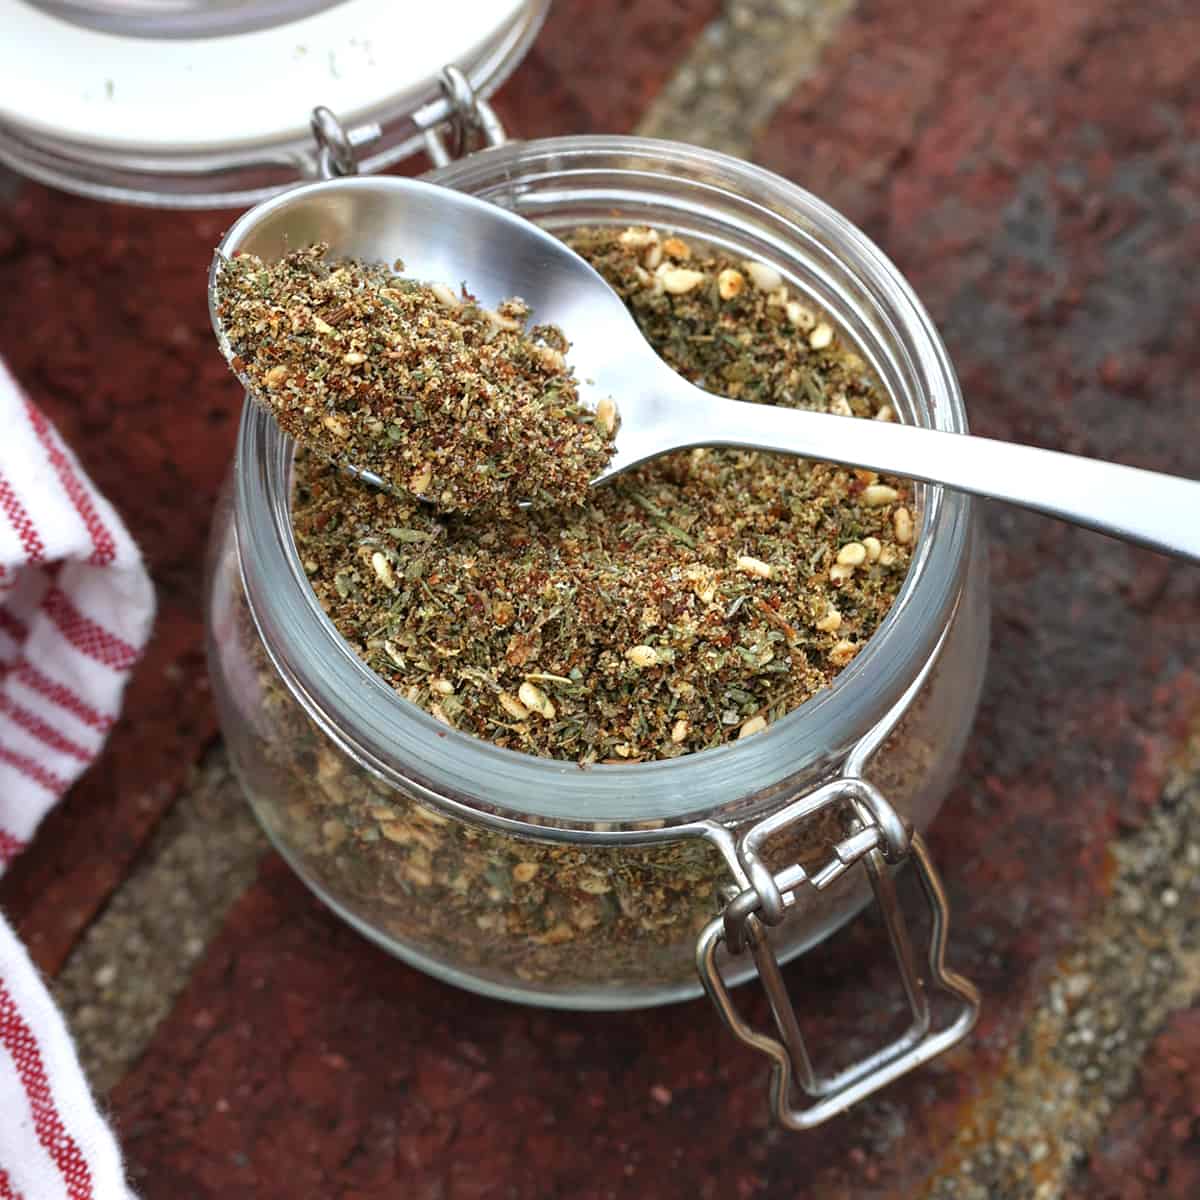 za'atar recipe homemade seasoning blend spice mix Middle Eastern sesame seeds sumac